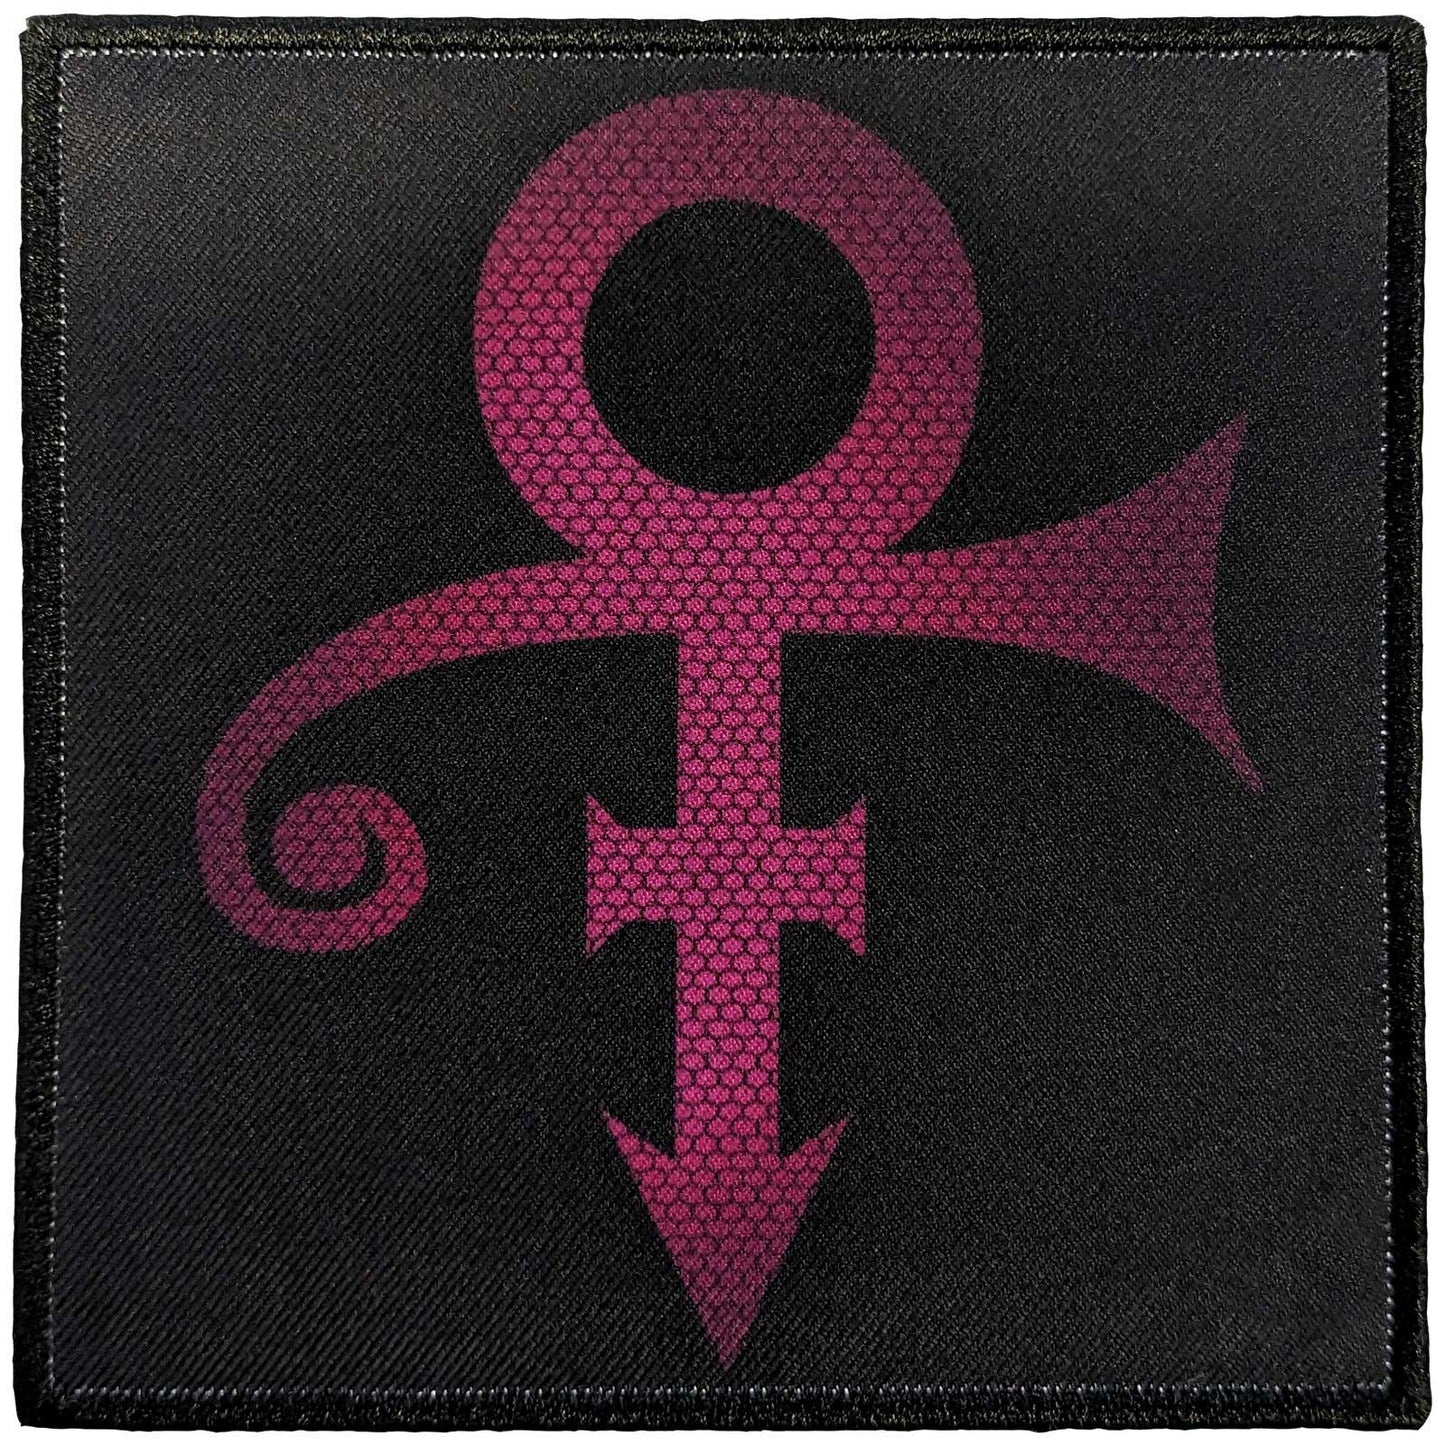 Prince Standard Printed Patch: Hexagonally Textured Symbol